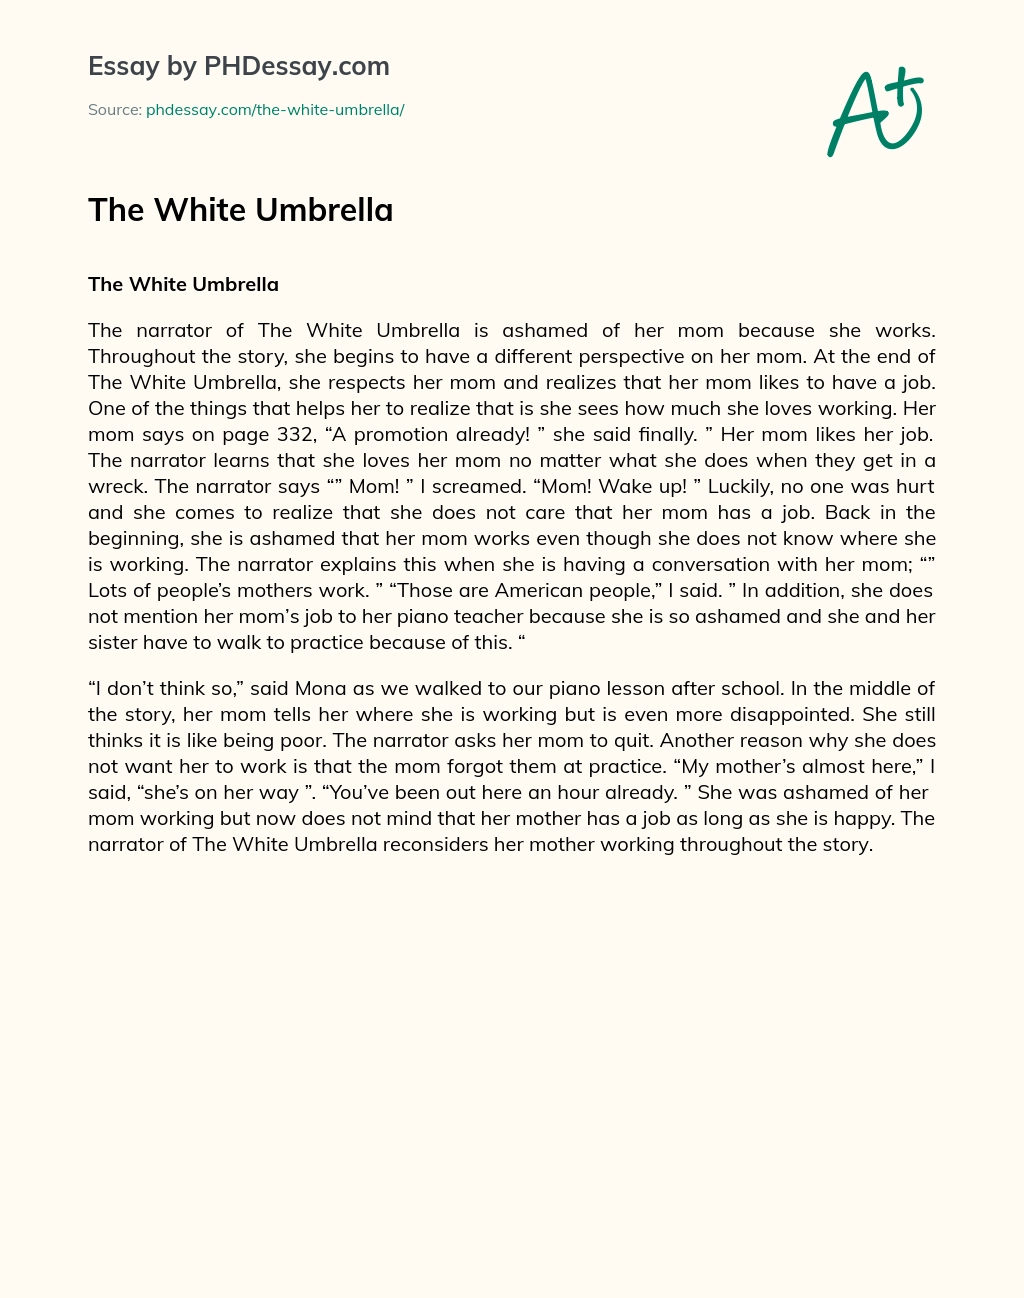 The White Umbrella essay